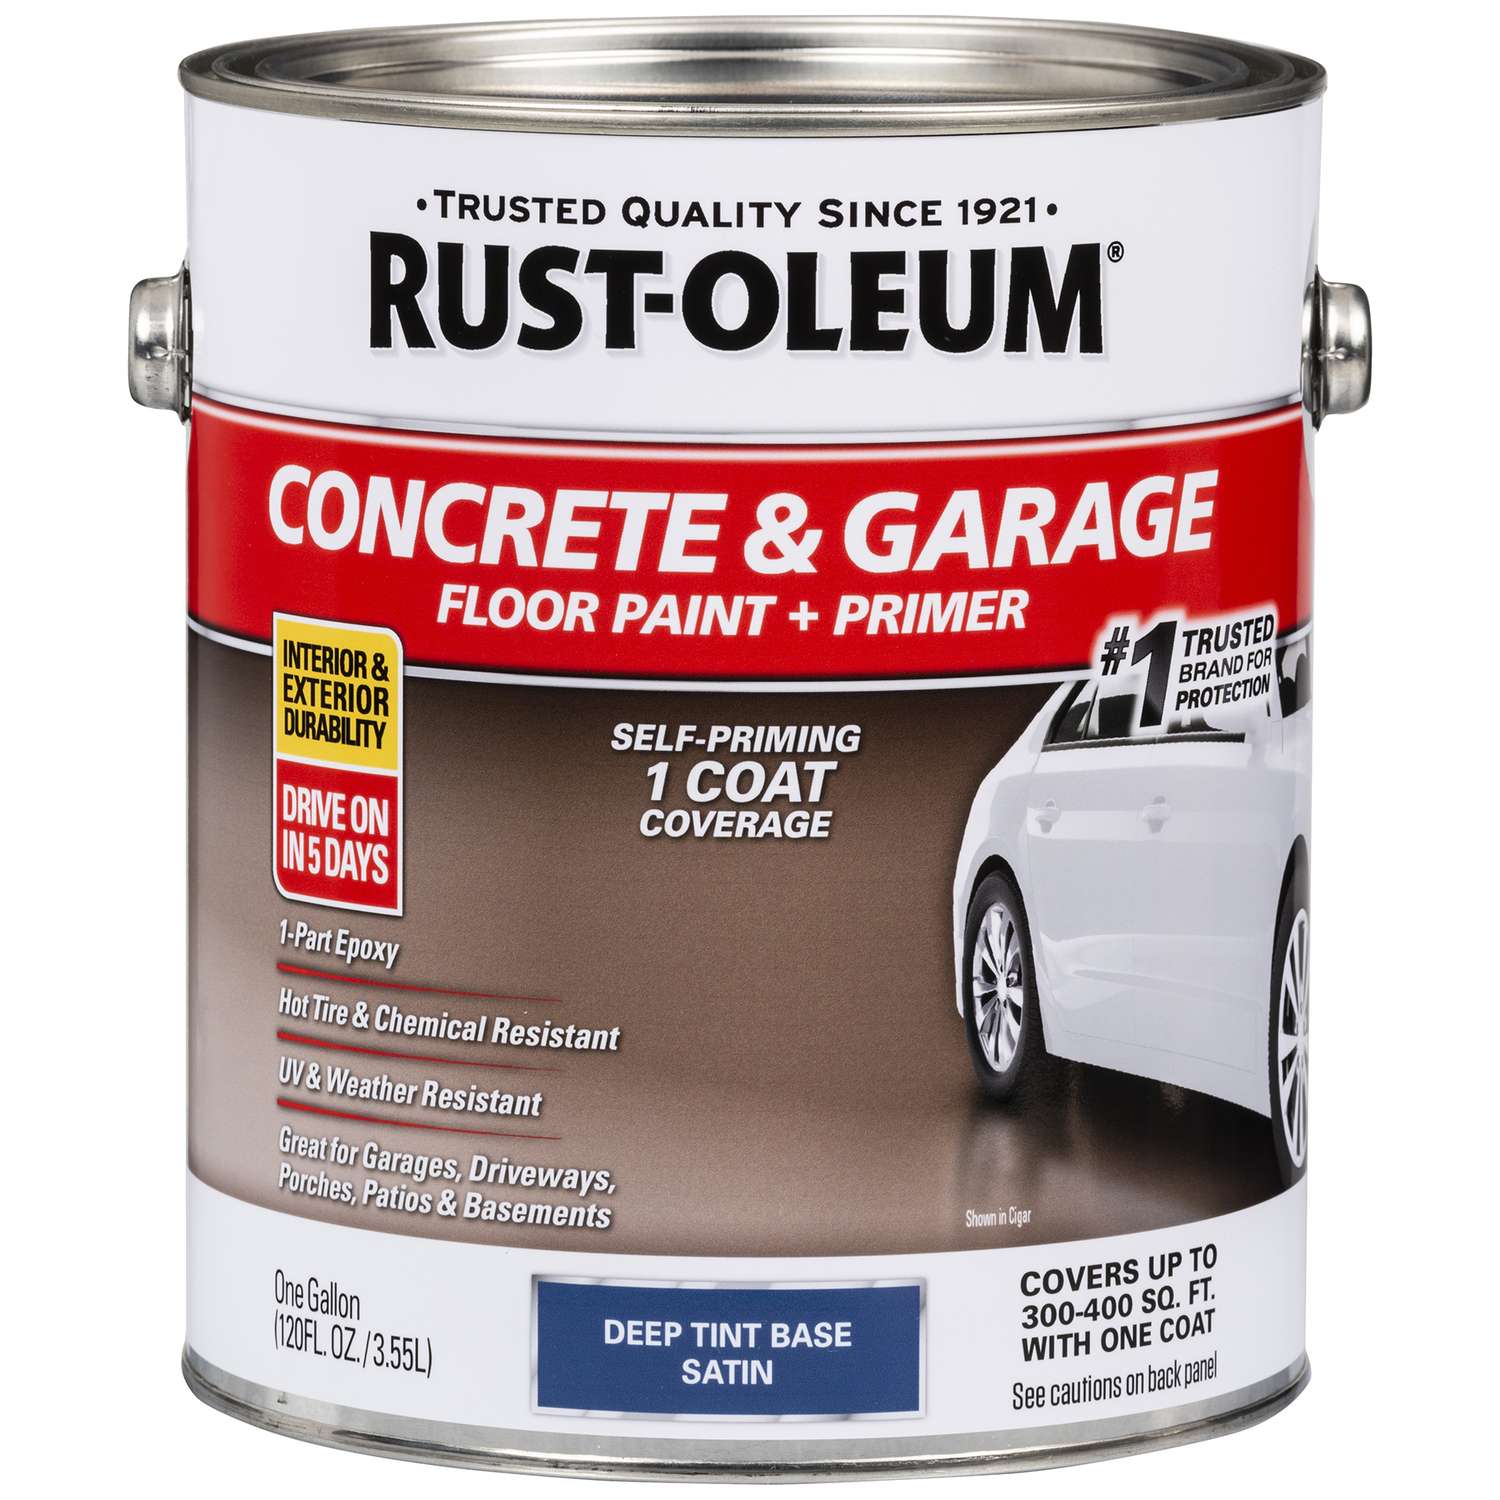 RustOleum Concrete & Garage Satin Deep Tint Base WaterBased Acrylic Concrete Floor Paint 1